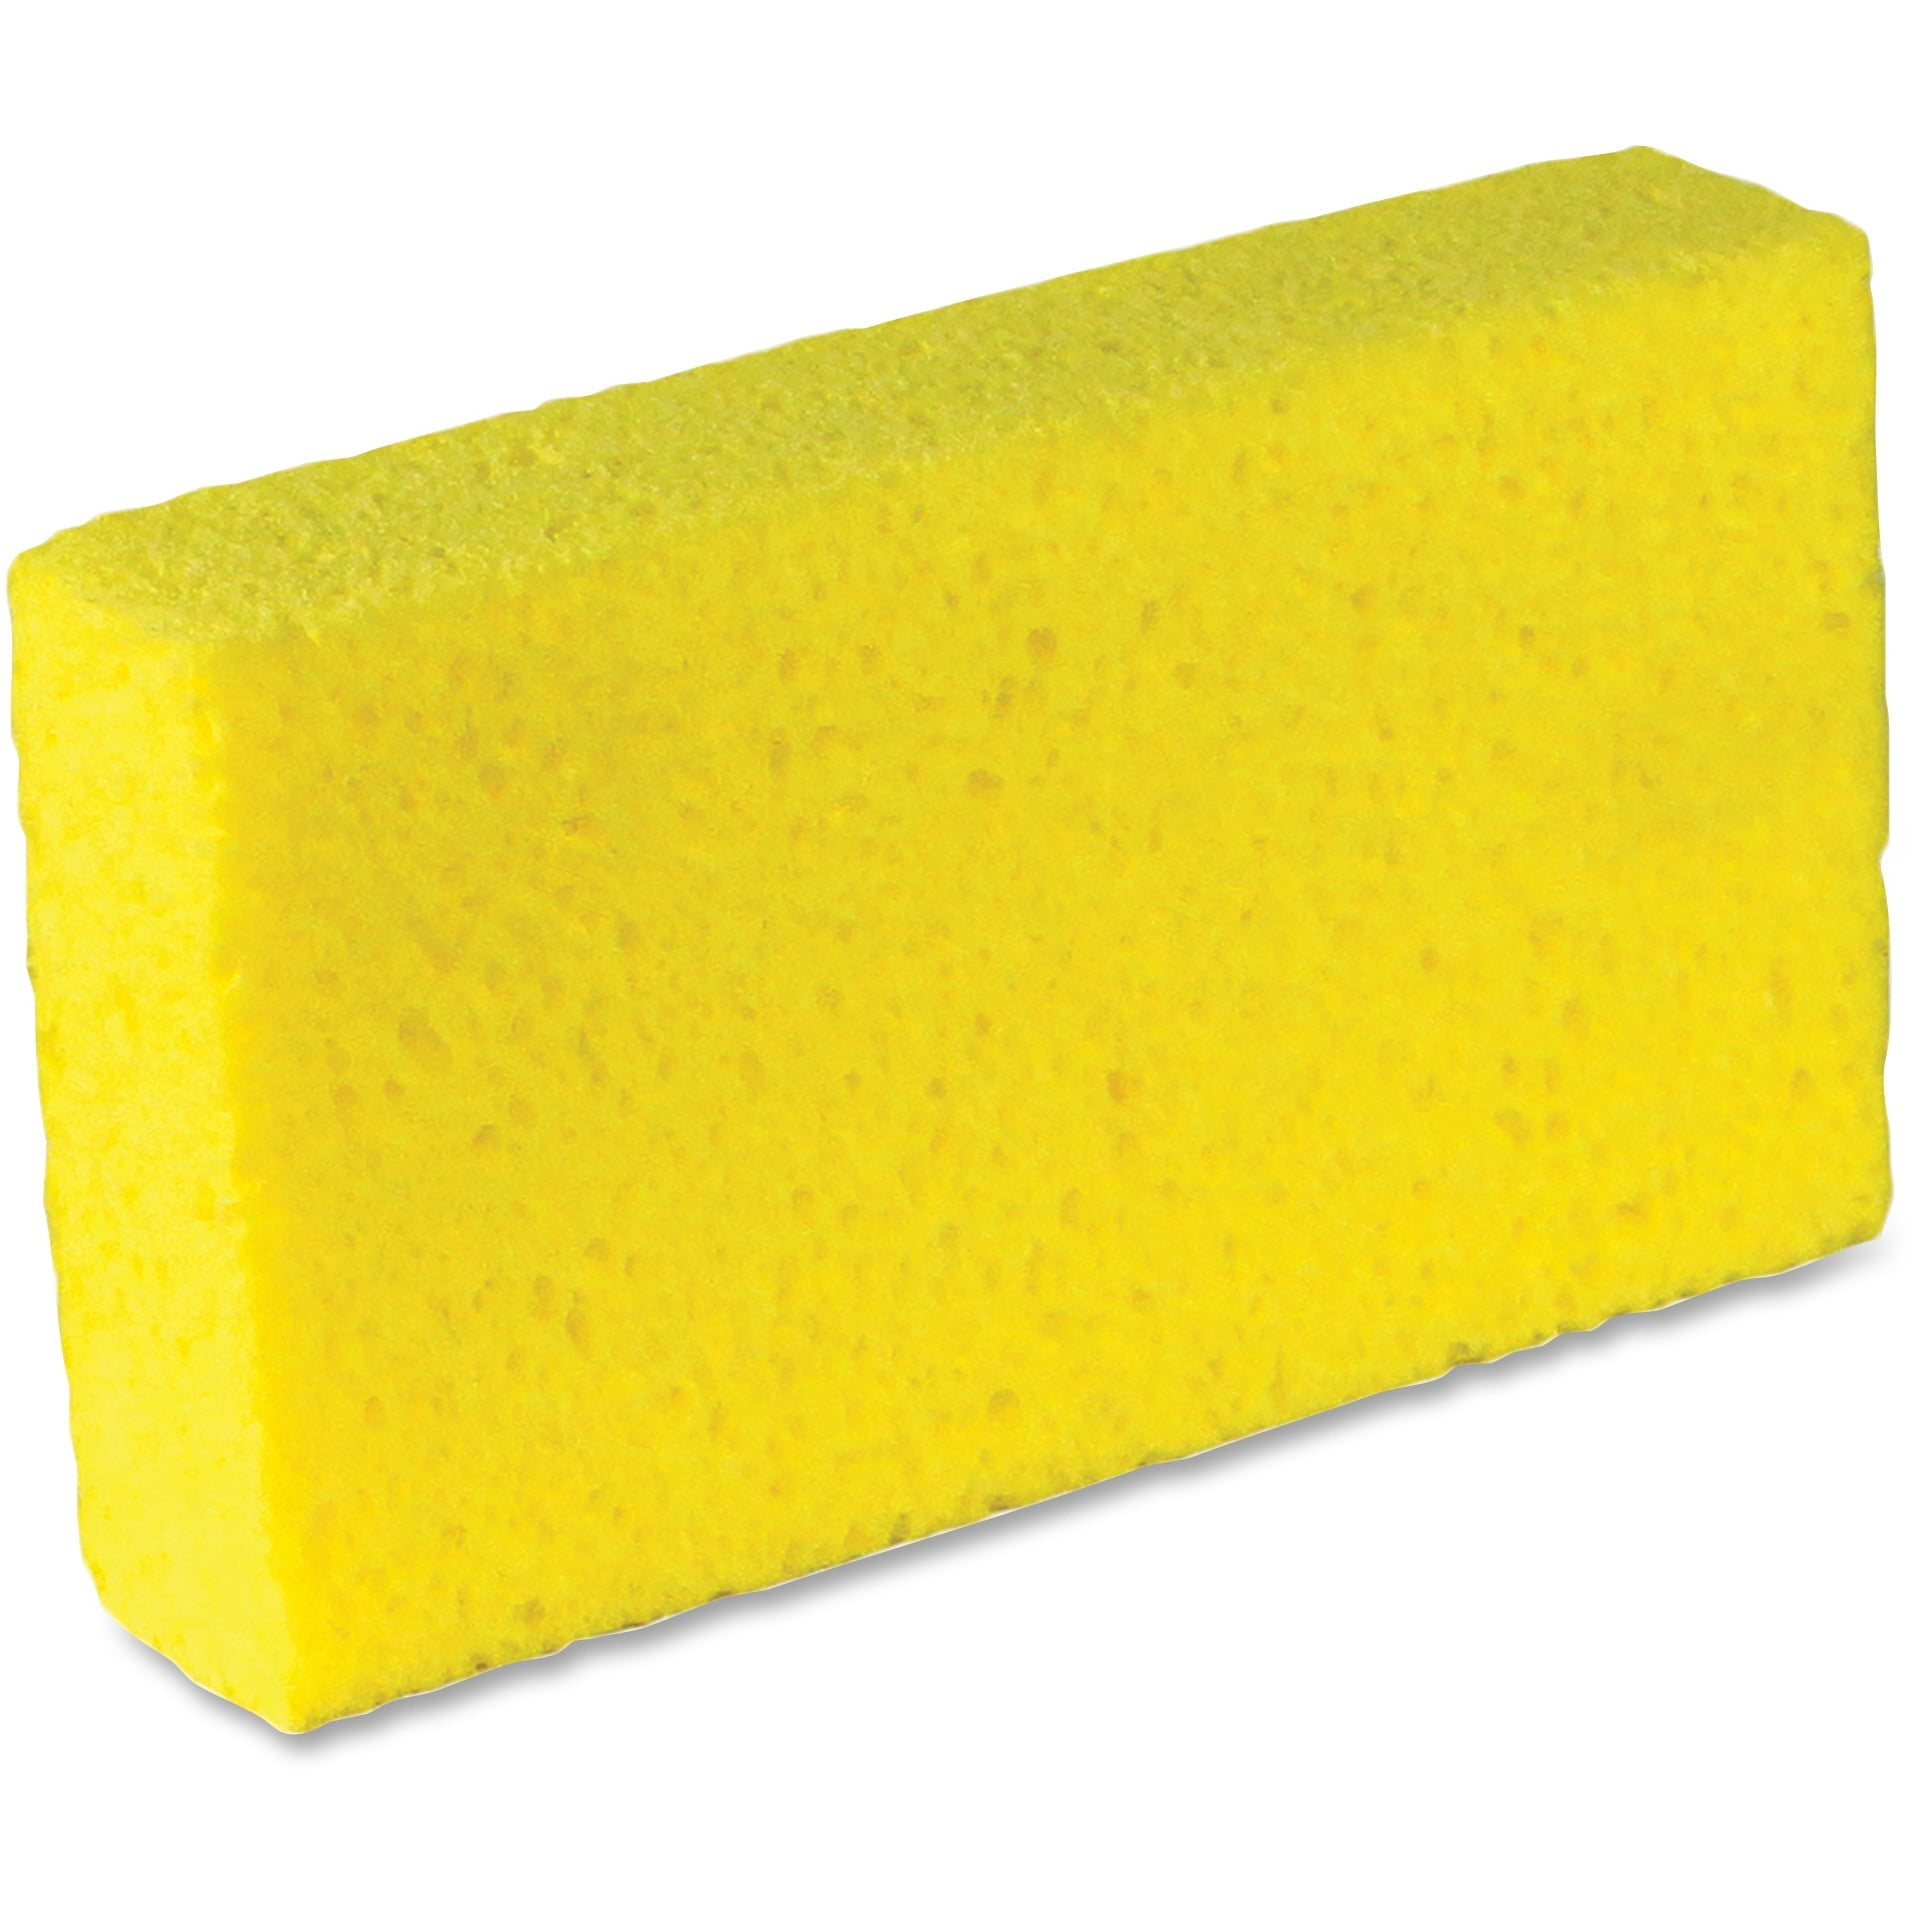 Sponge 2. Желтый спонж. Спонж Целлюлоза. Grout Sponges. Губка для затирок Special Sponge for grouting PC.